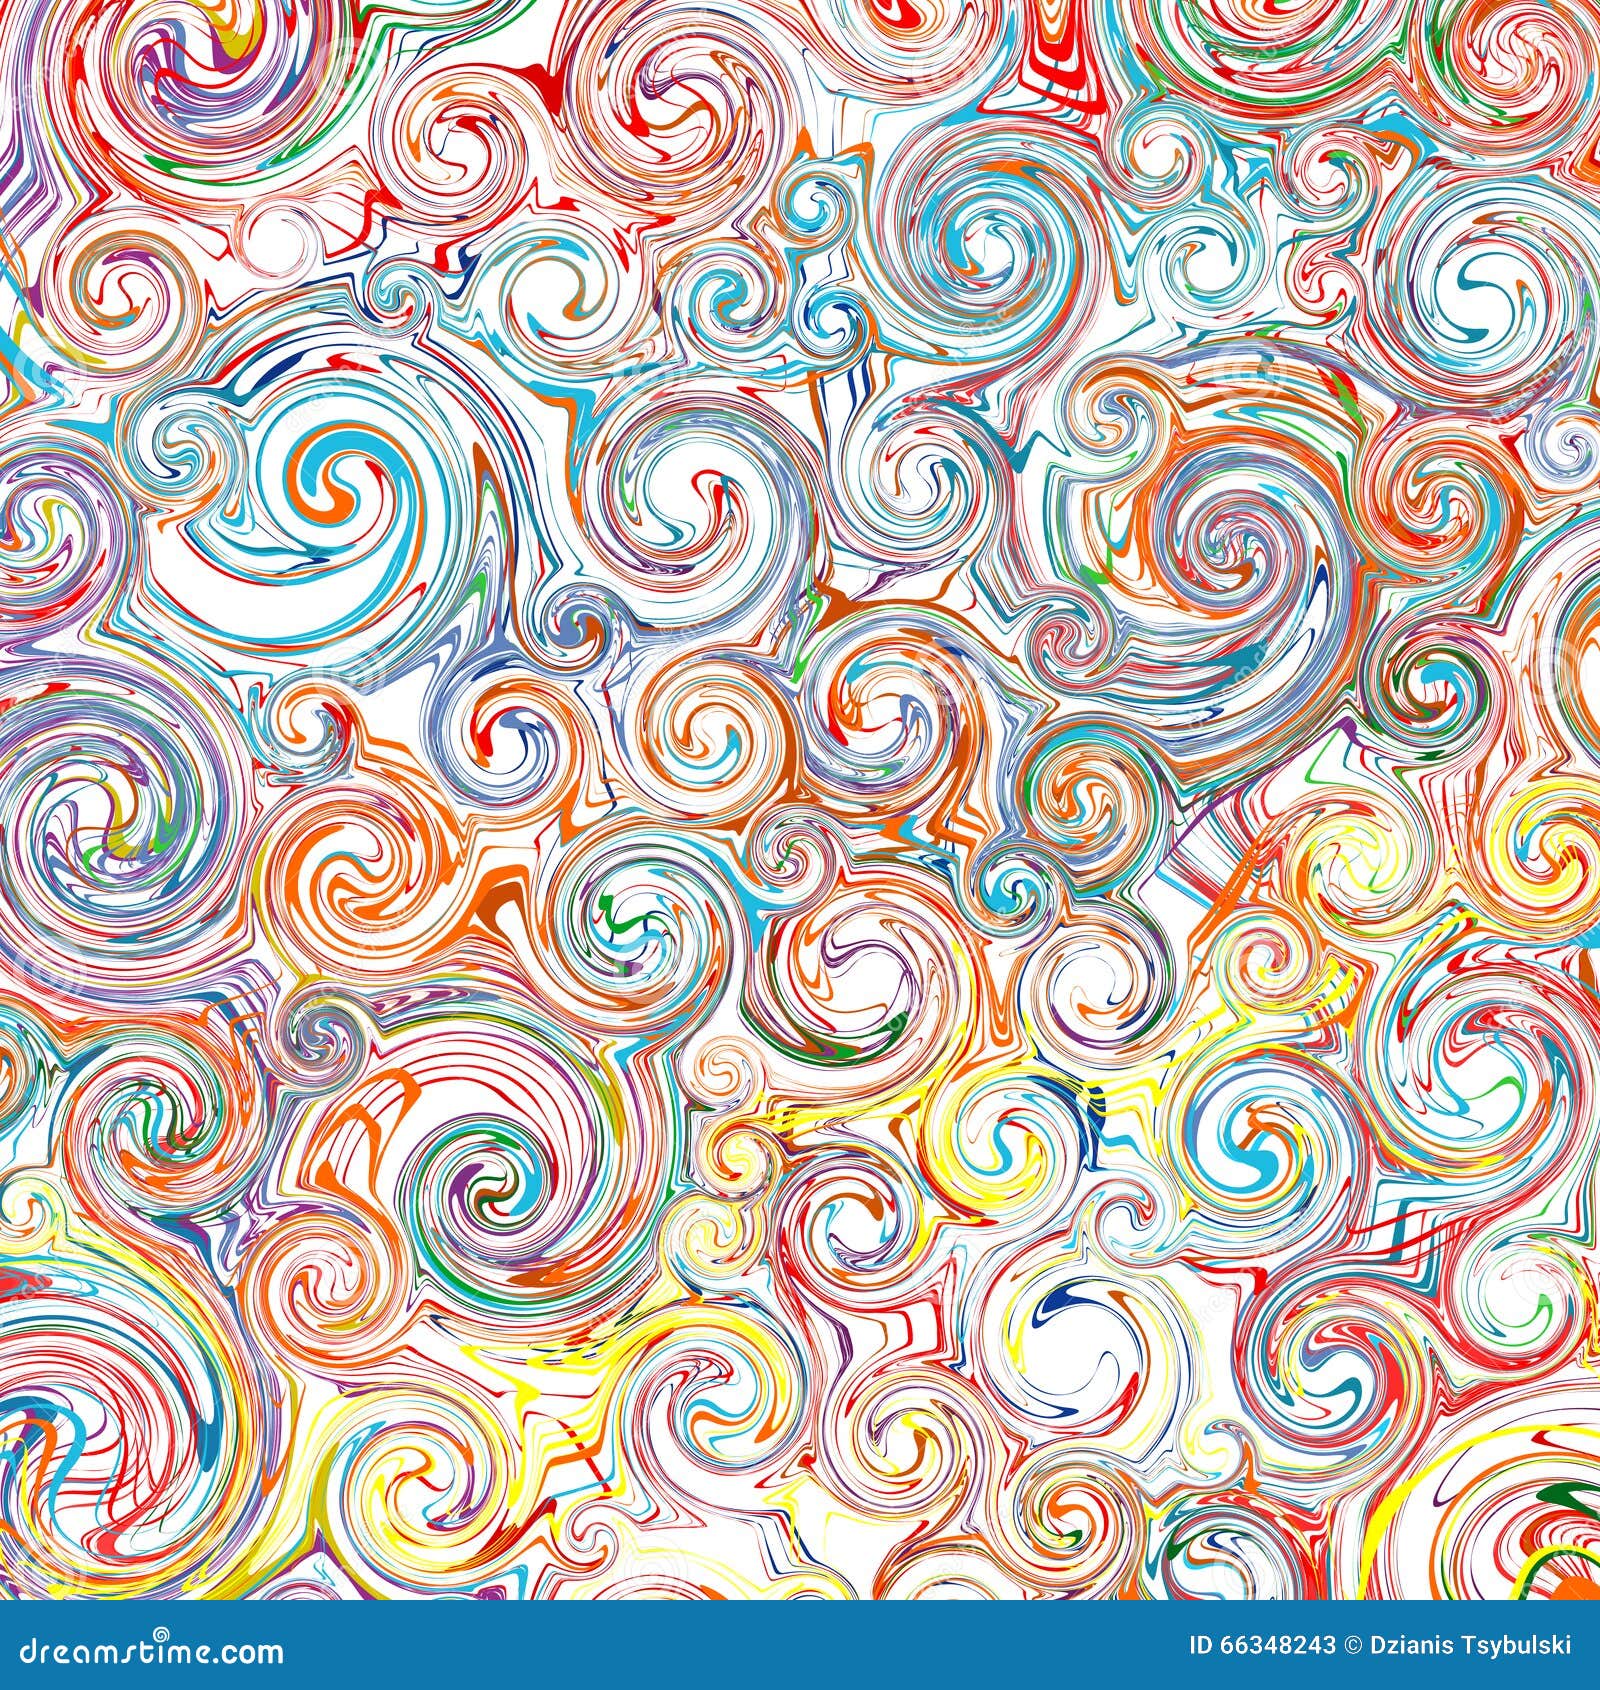 Download 54 Background Line Art Color HD Terbaik